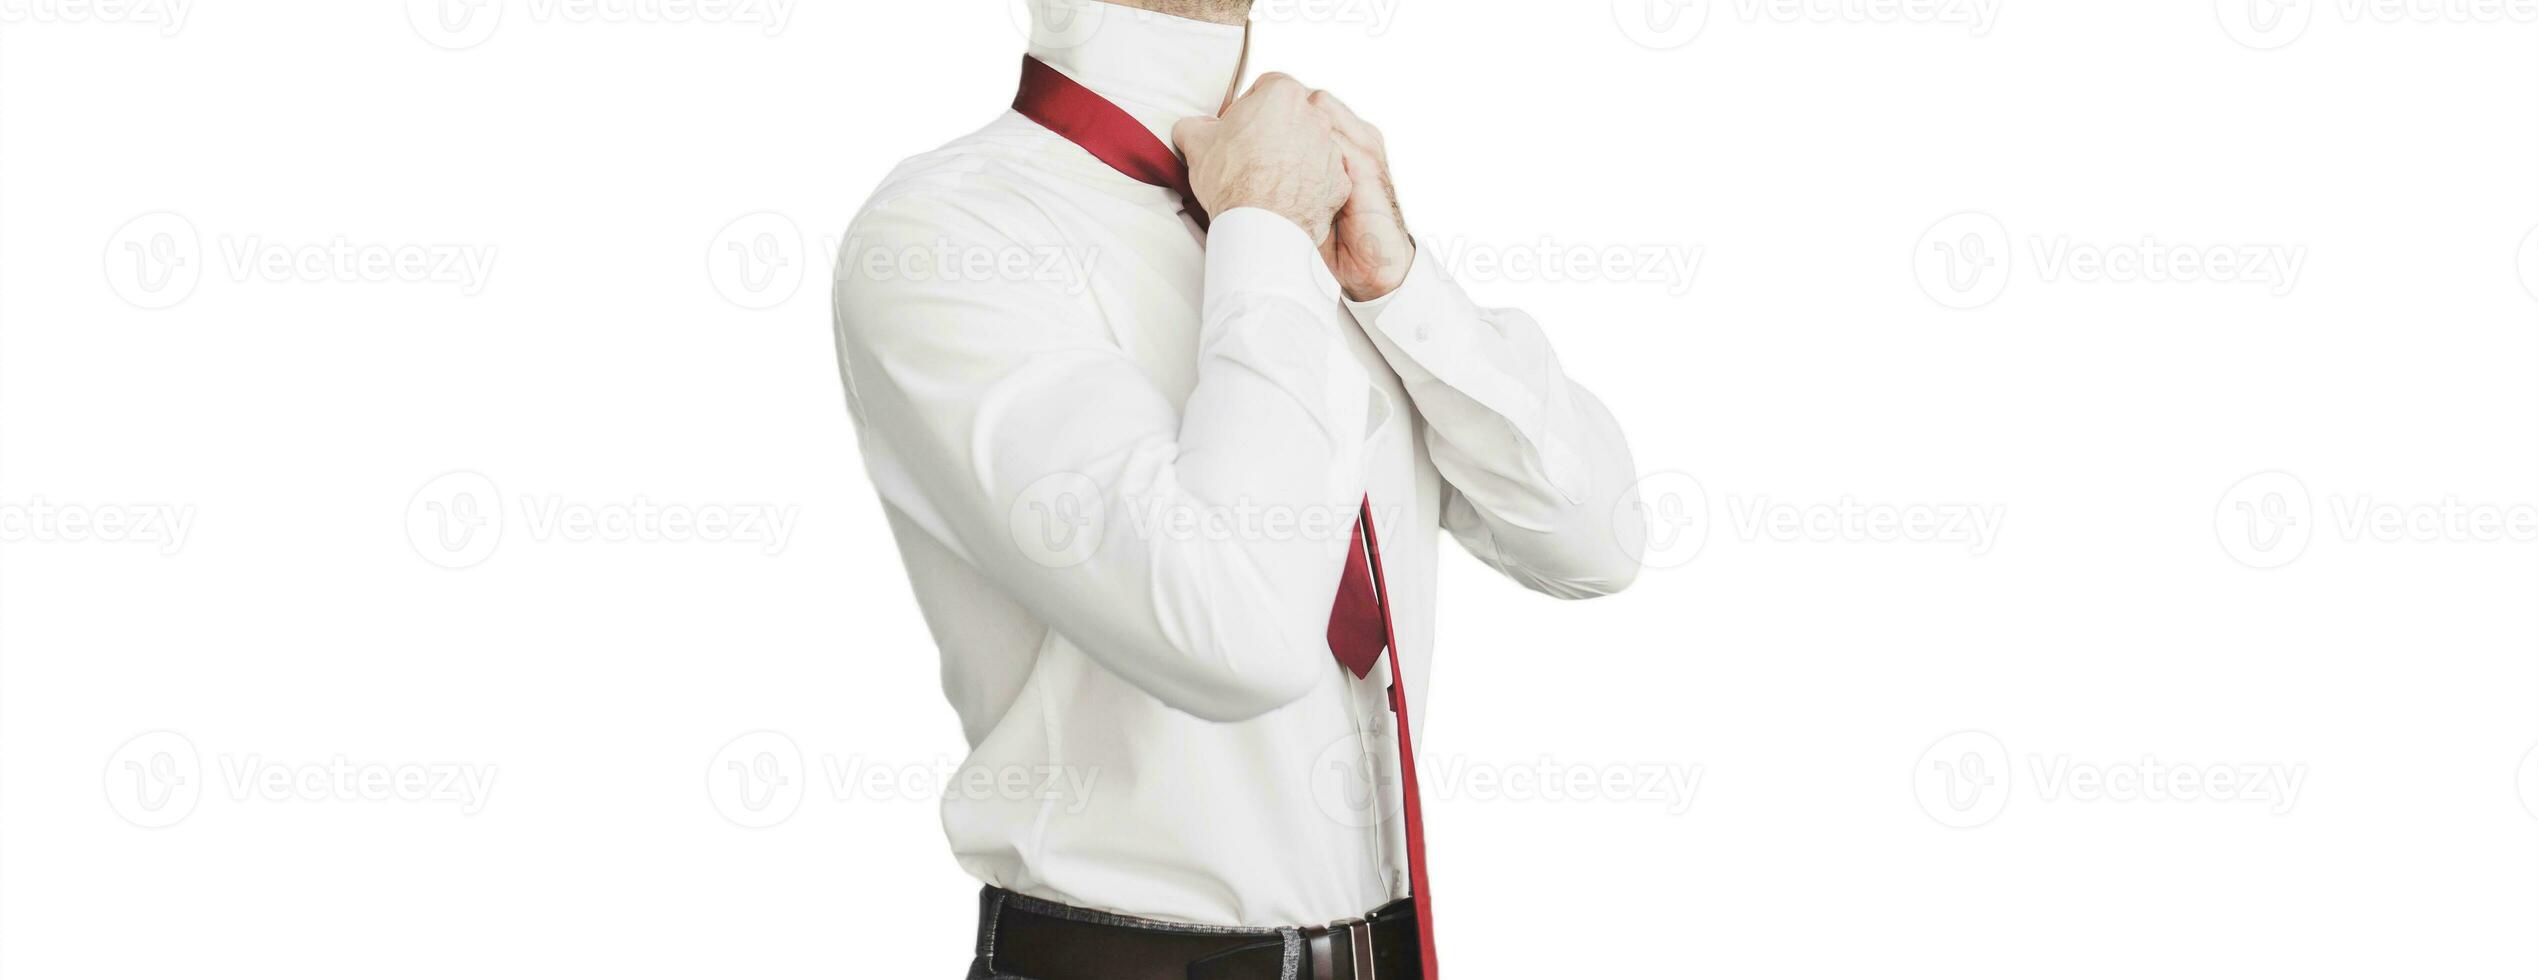 groom straightens his shirt on white background photo